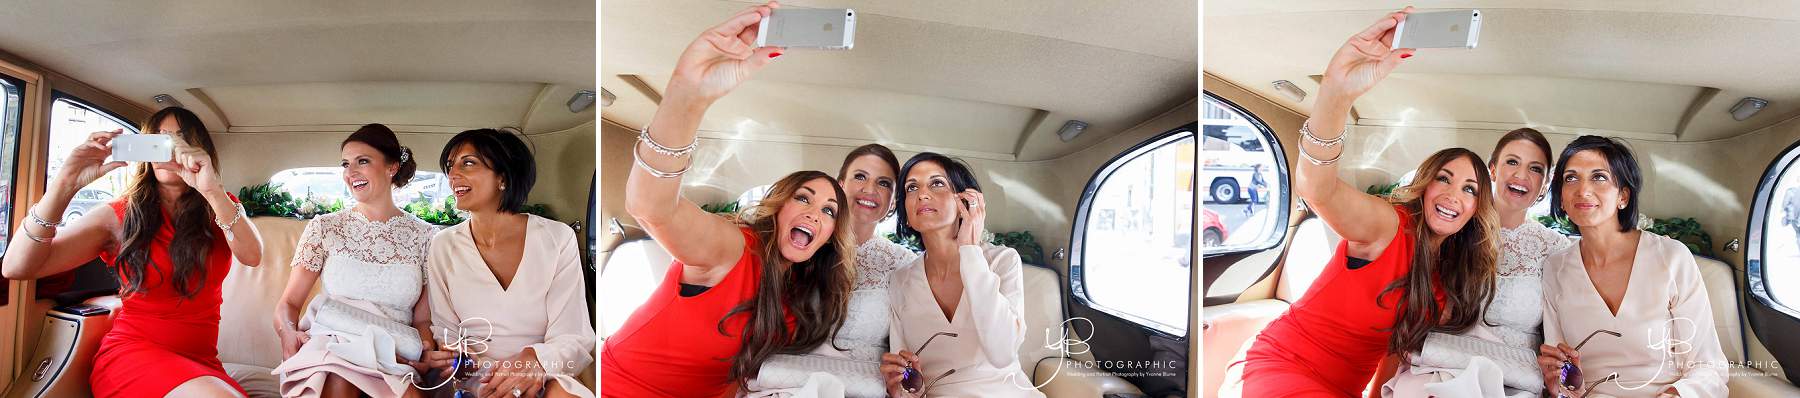 Rolls Royce wedding selfies